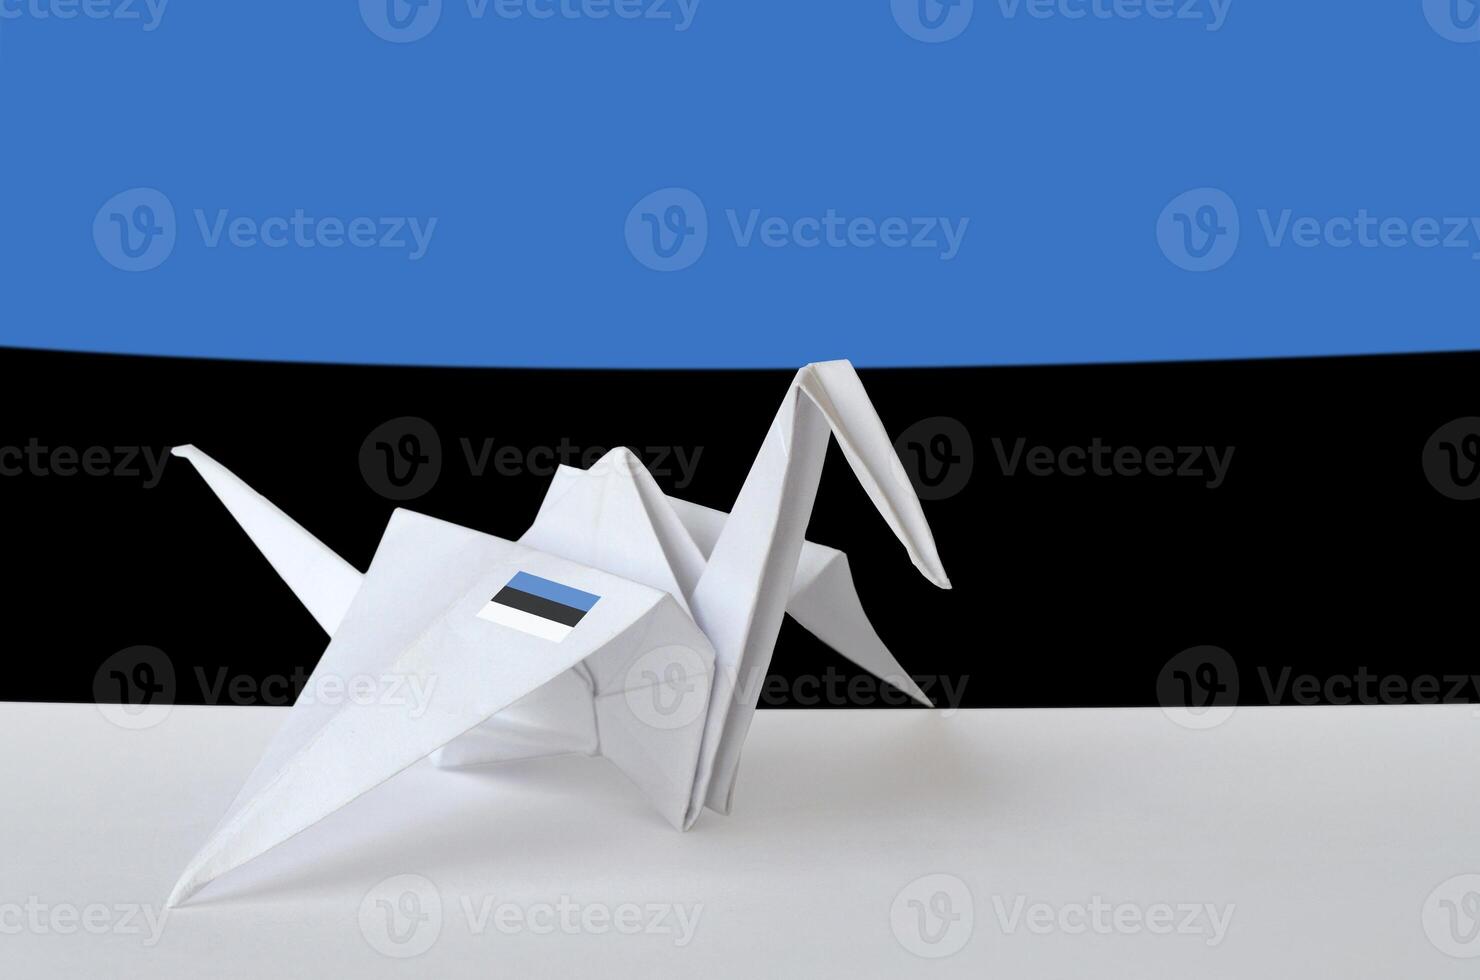 Estonia flag depicted on paper origami crane wing. Handmade arts concept photo